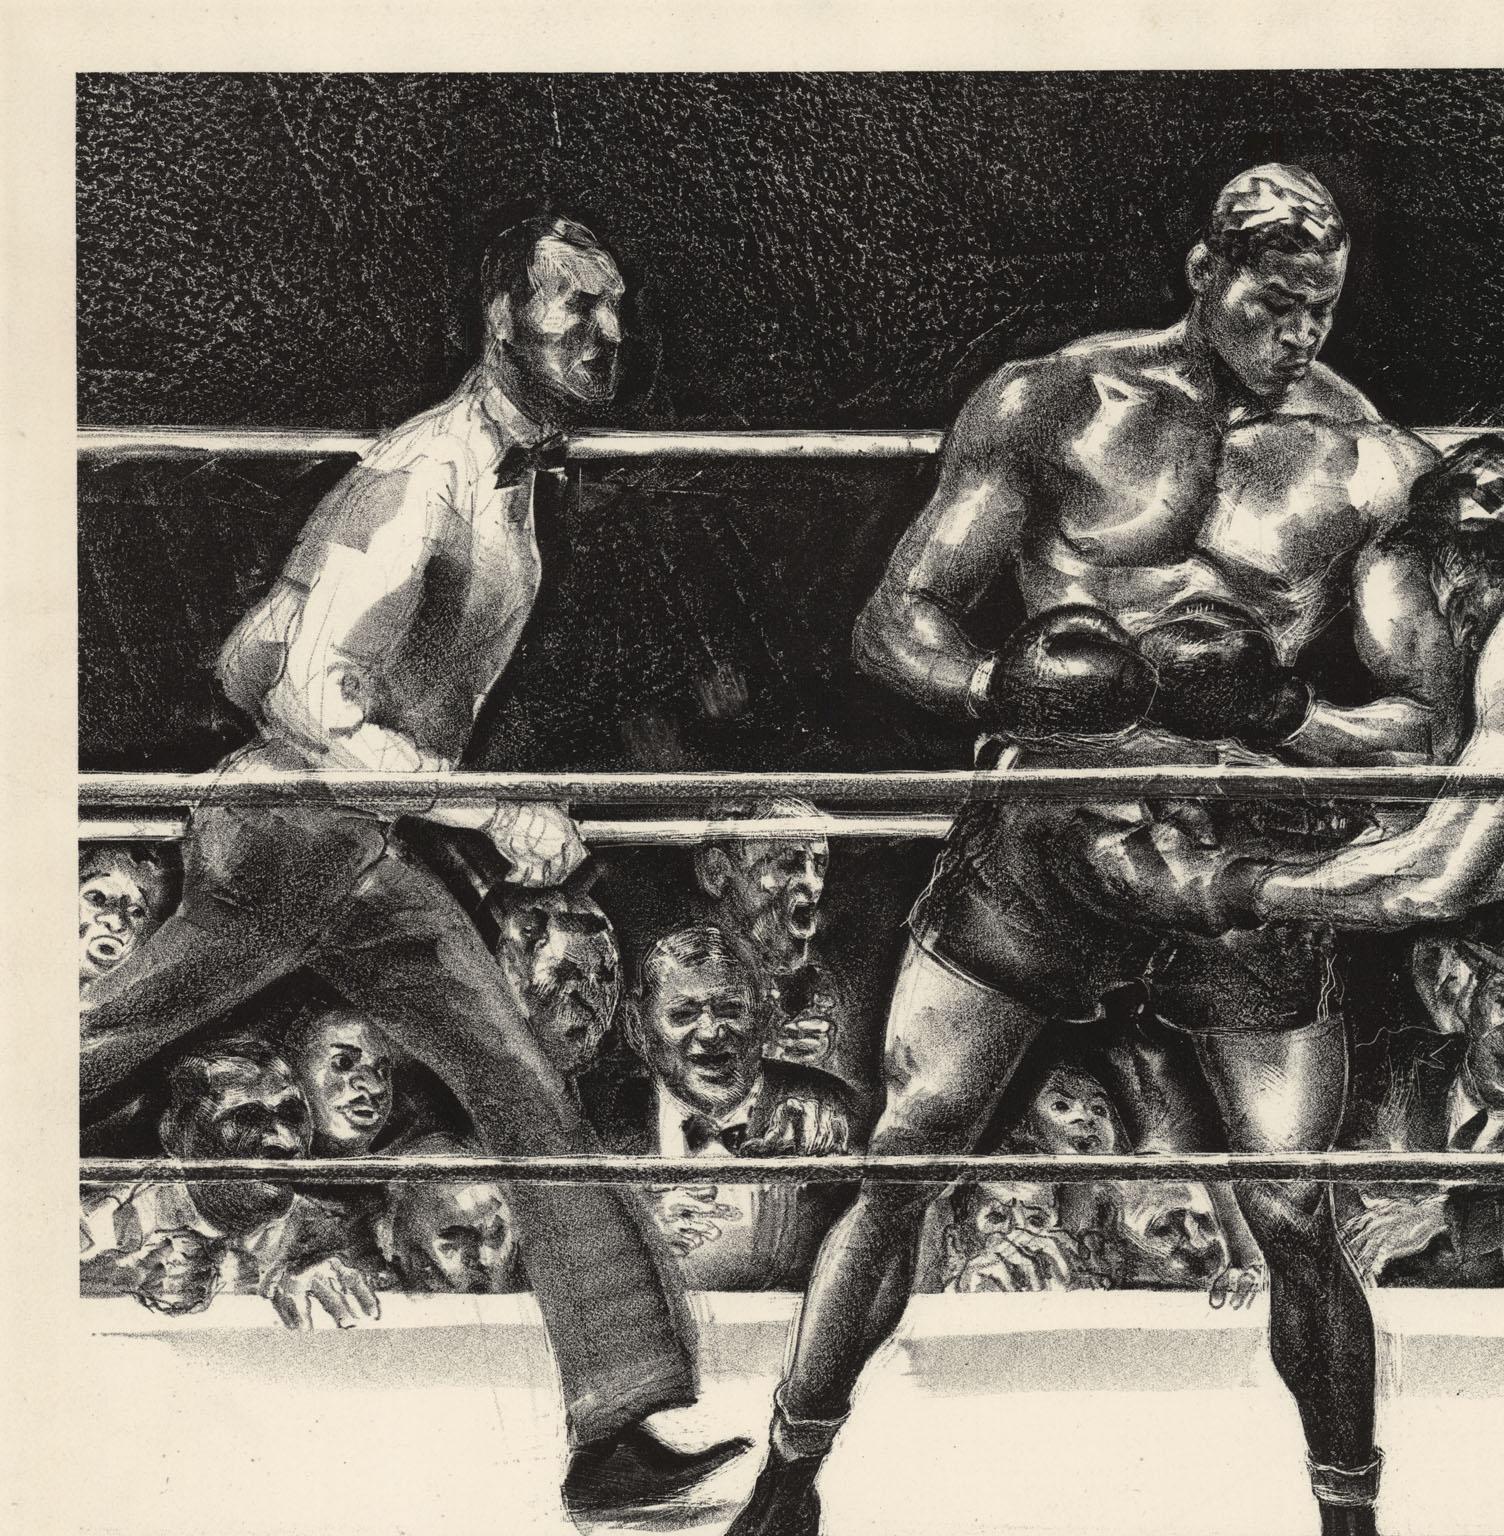 Joe Louis vs. Max Baer at Yankee Stadium - Naturalistic Print by Joseph Webster Golinkin